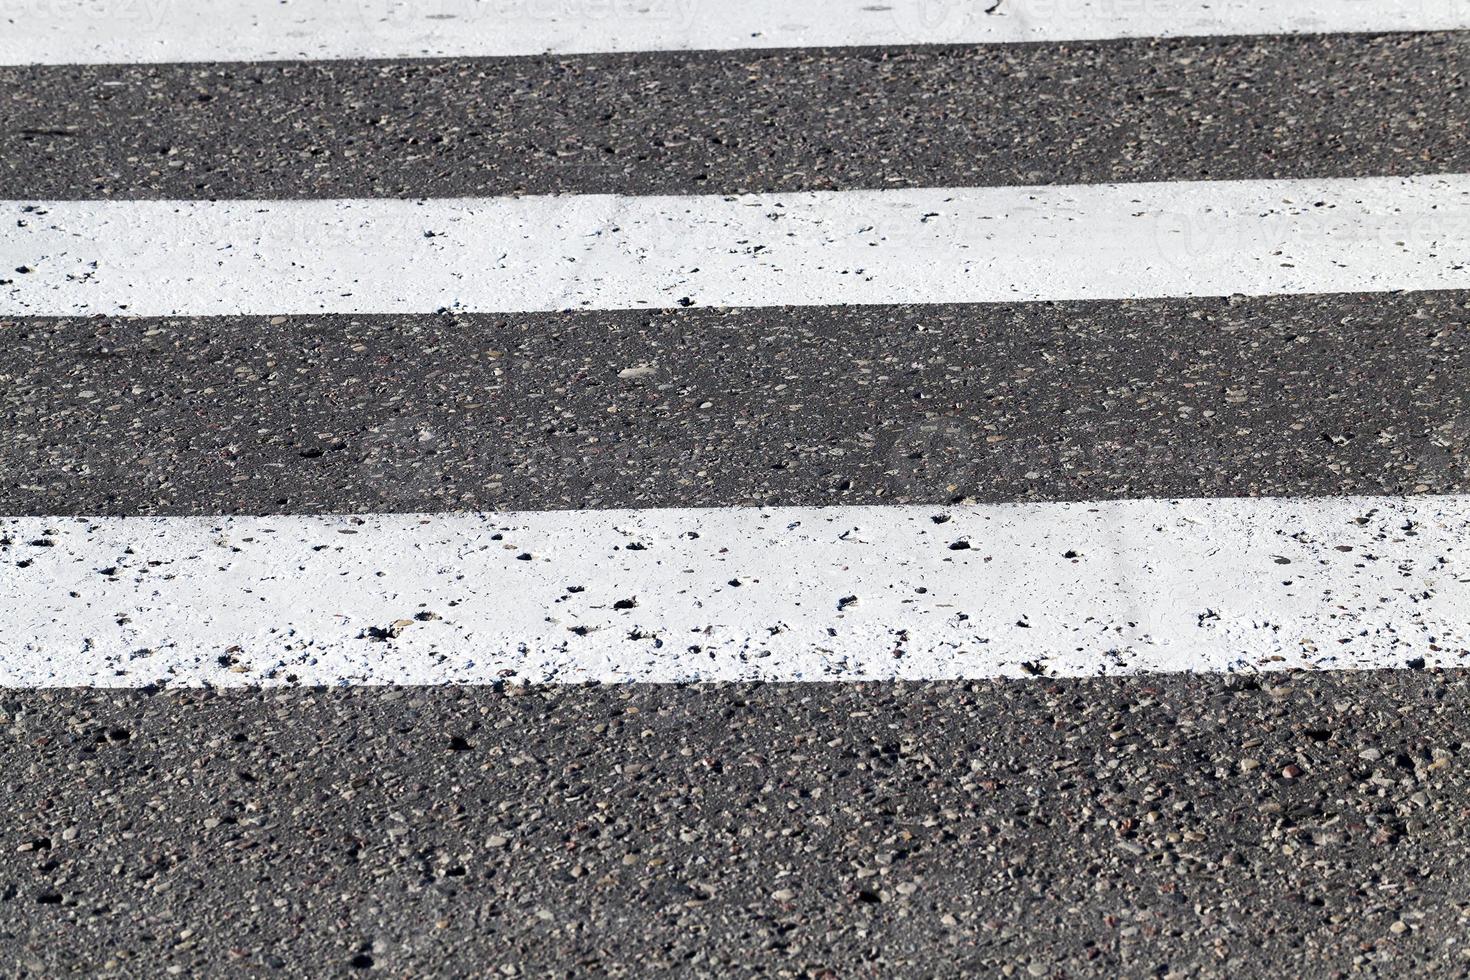 road markings, close-up photo